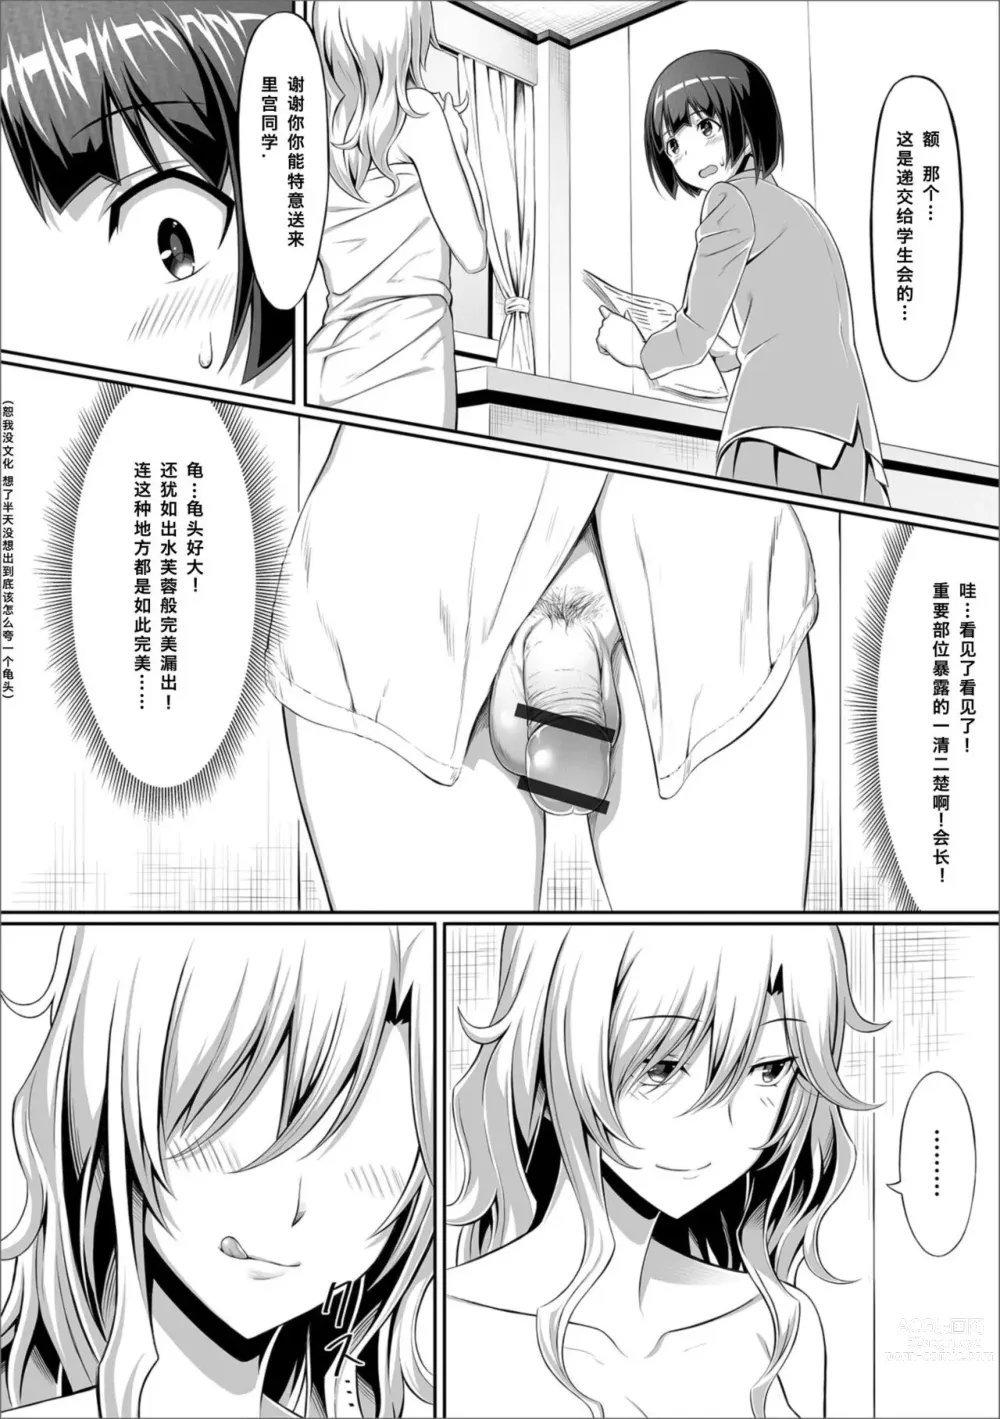 Page 4 of manga Anata no Okage de